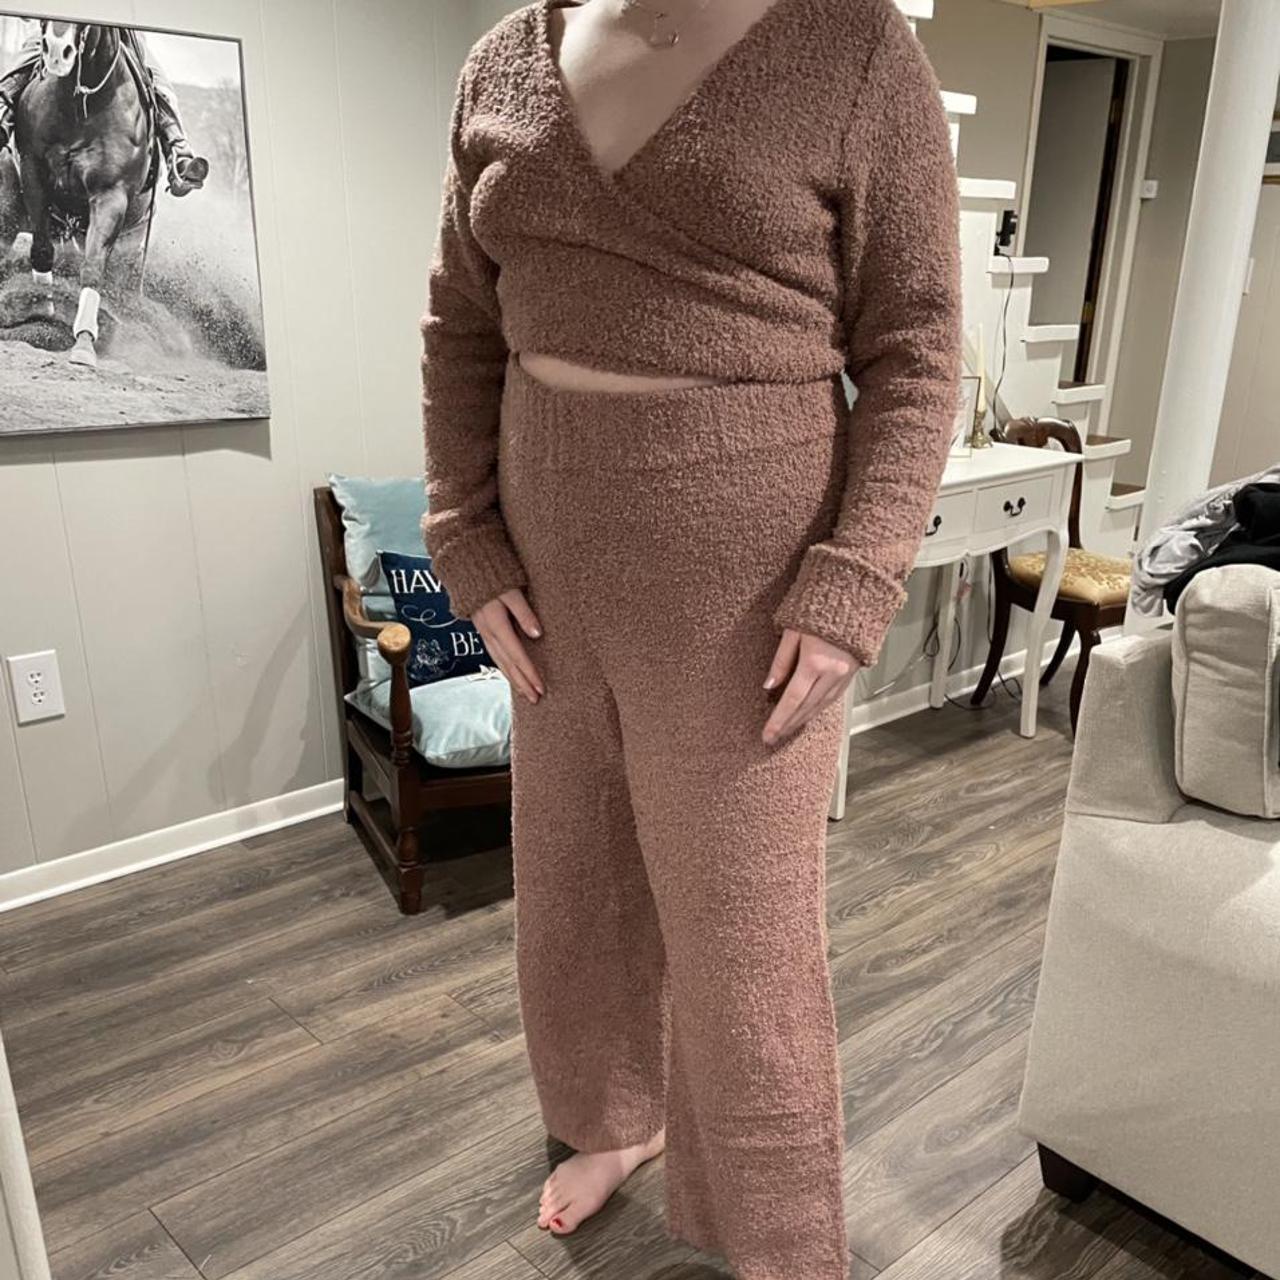 SKIMS cozy knit wrap top + lounge pants in color - Depop